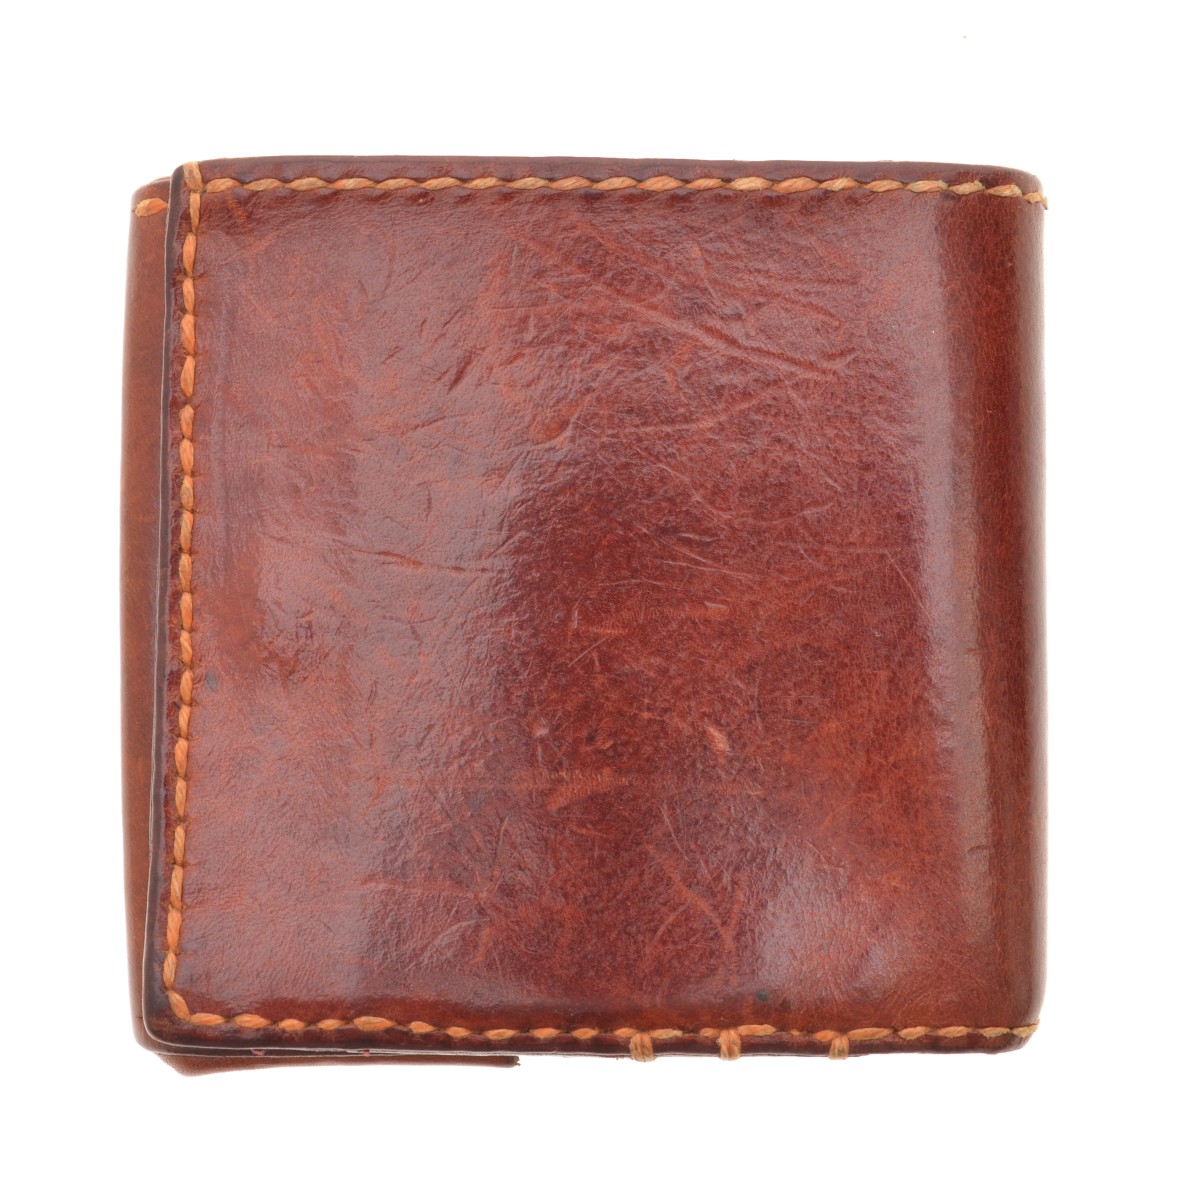 HENRY CUIR / アンリクイール レザー 二つ折り 財布 -ブランド古着の買取販売カンフル